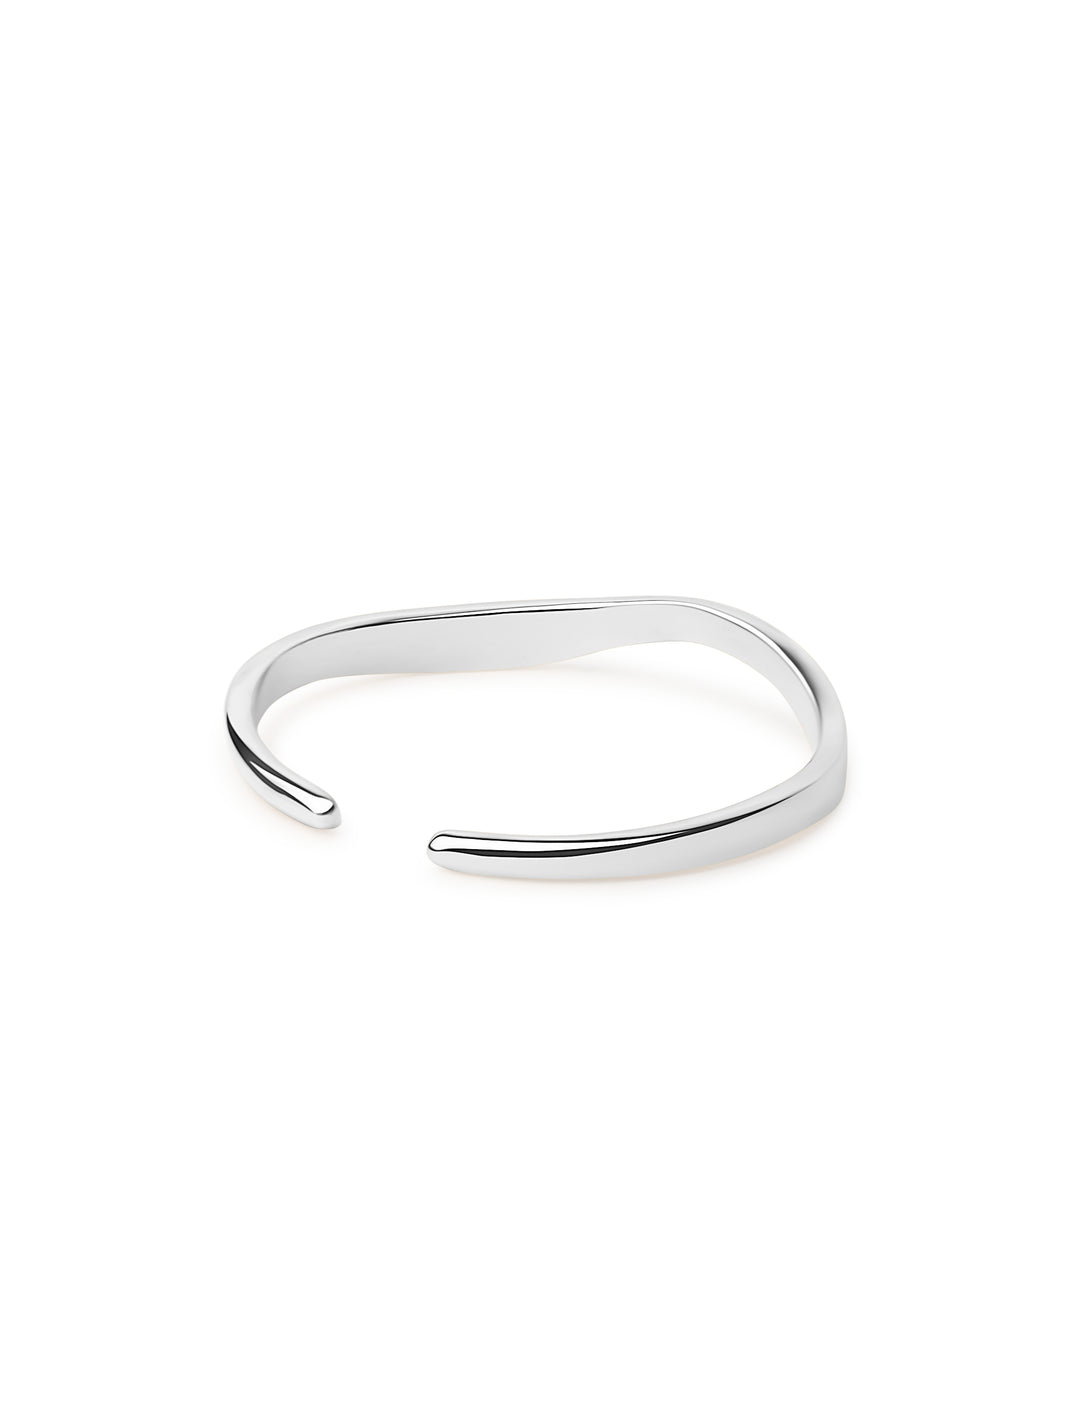 Asymmetrical Statement Cuff Bracelet Silver